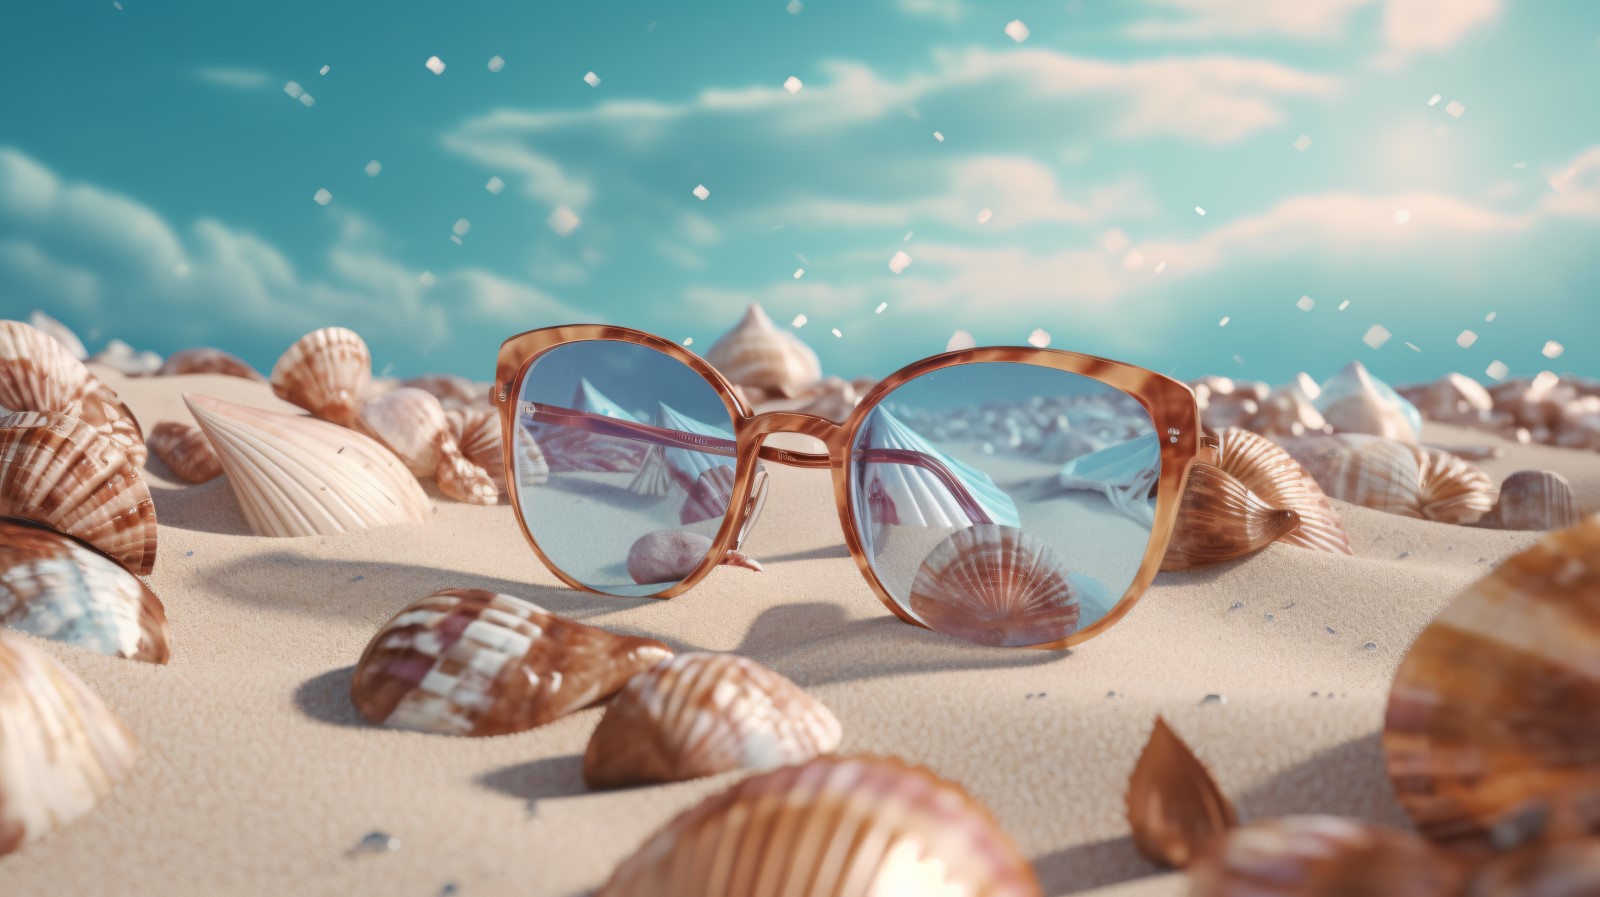 Beach sunglasses and seashells falling summer background 315